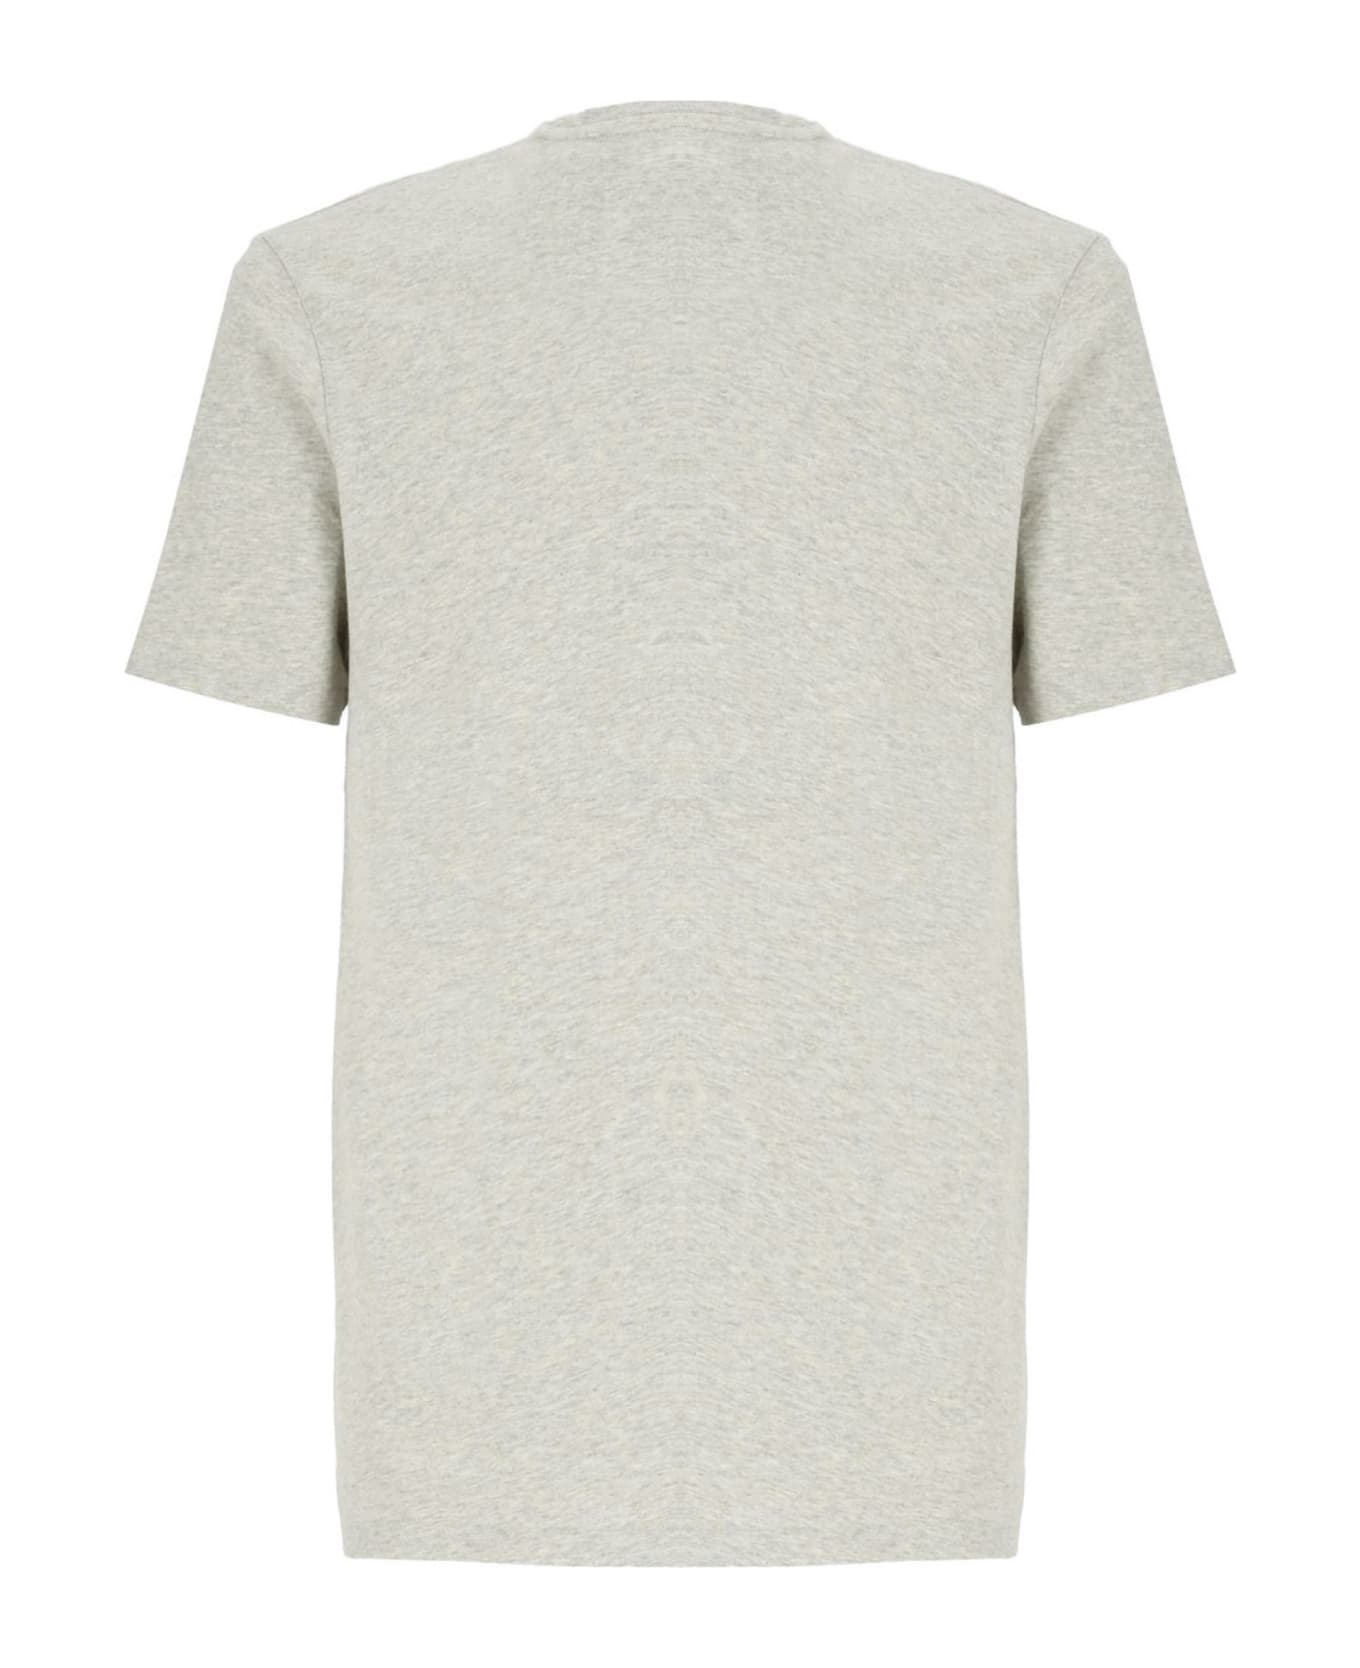 Ralph Lauren Grey Cotton T-shirt - NEW GREY HEATHER